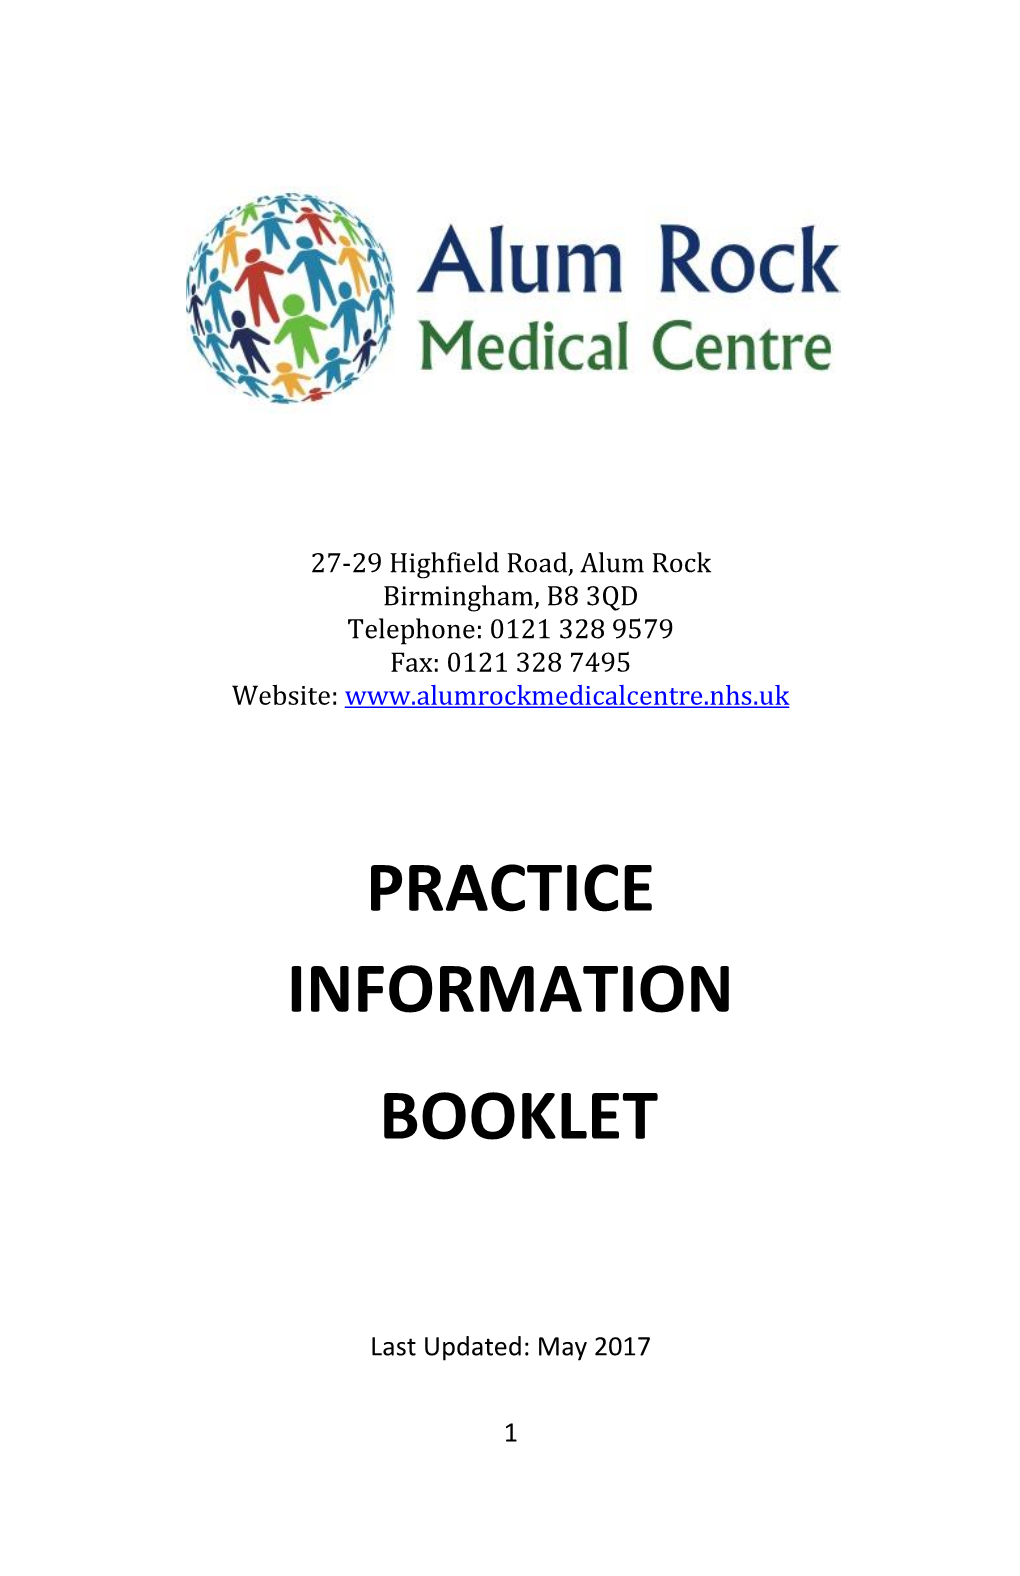 Practice Information Booklet